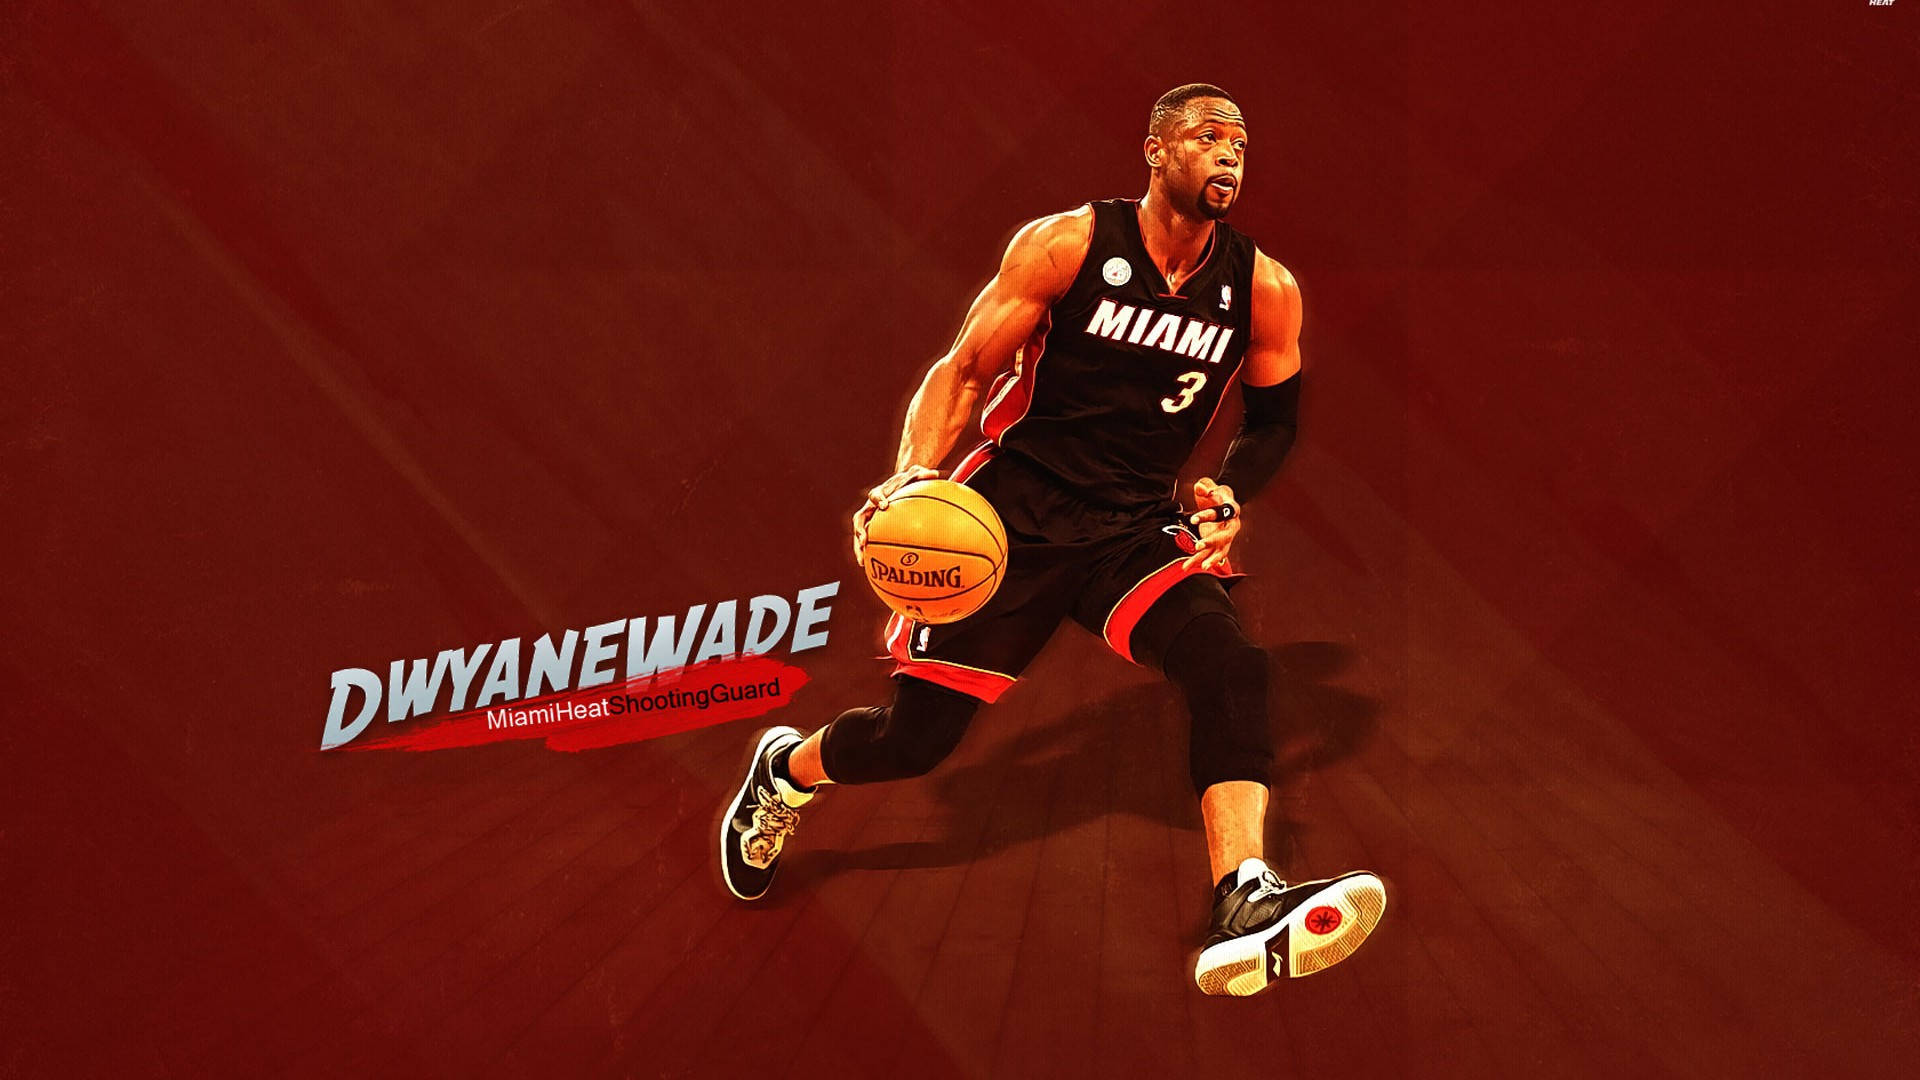 Miami Heat Dwayne Wade Background